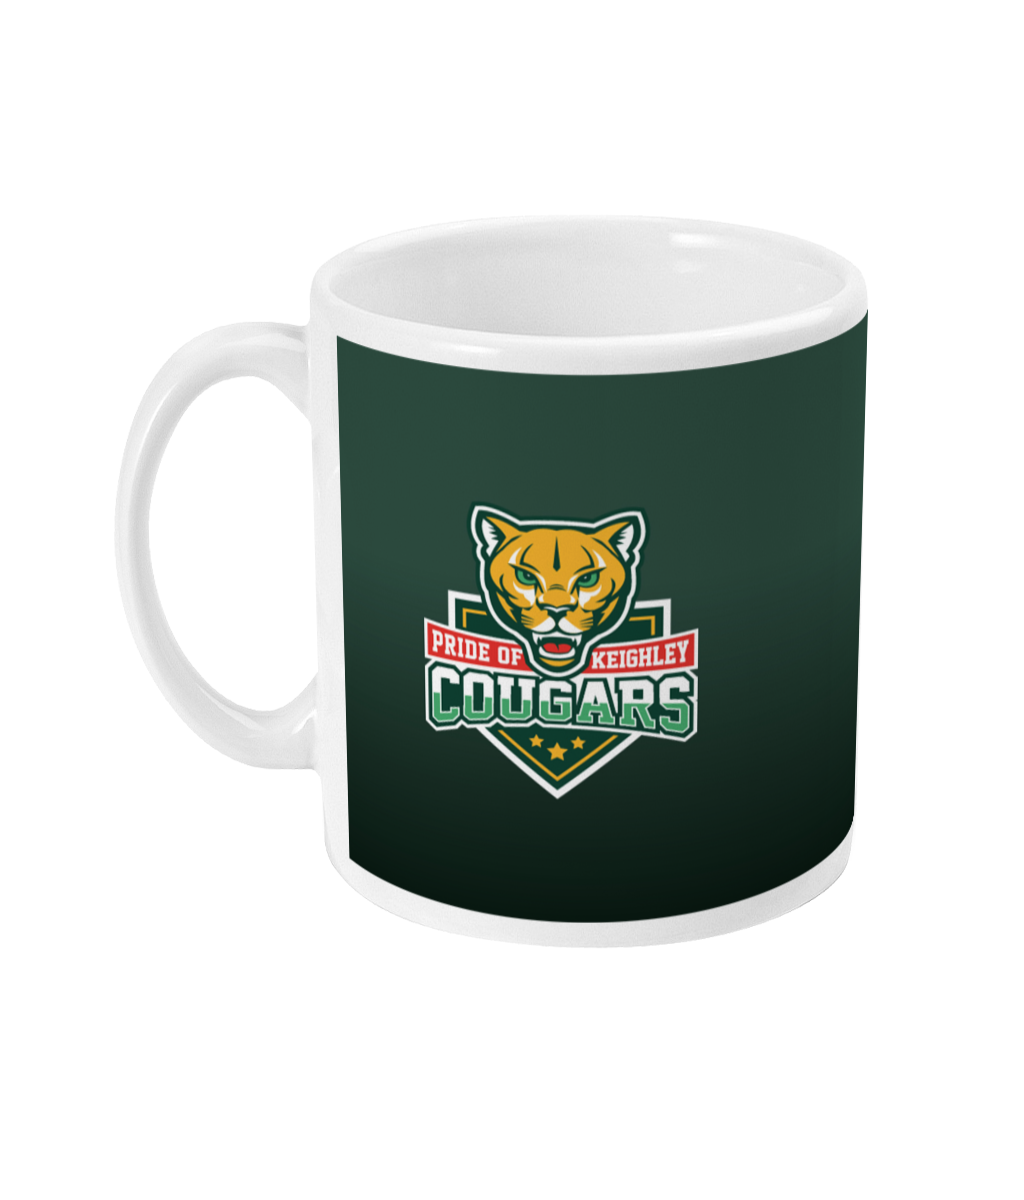 Keighley Cougars Green Crest Mug